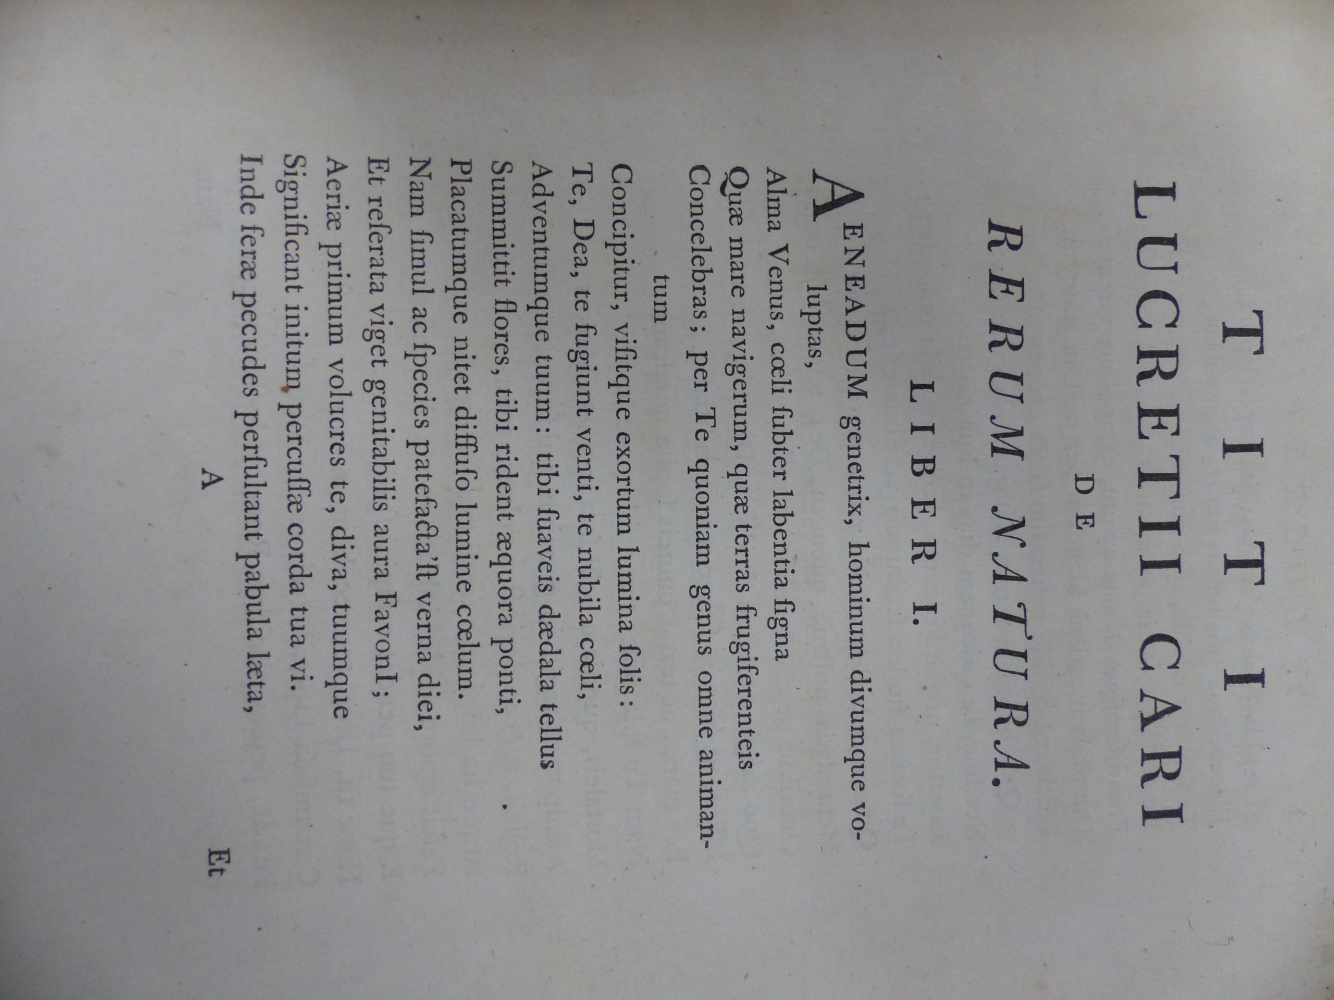 TITI LUCRETII CARI DE RERUM NATURA, BOOK 6, PRINTED BY JOHANNIS BASKERVILLE 1772, LEATHER BOUND - Image 5 of 7